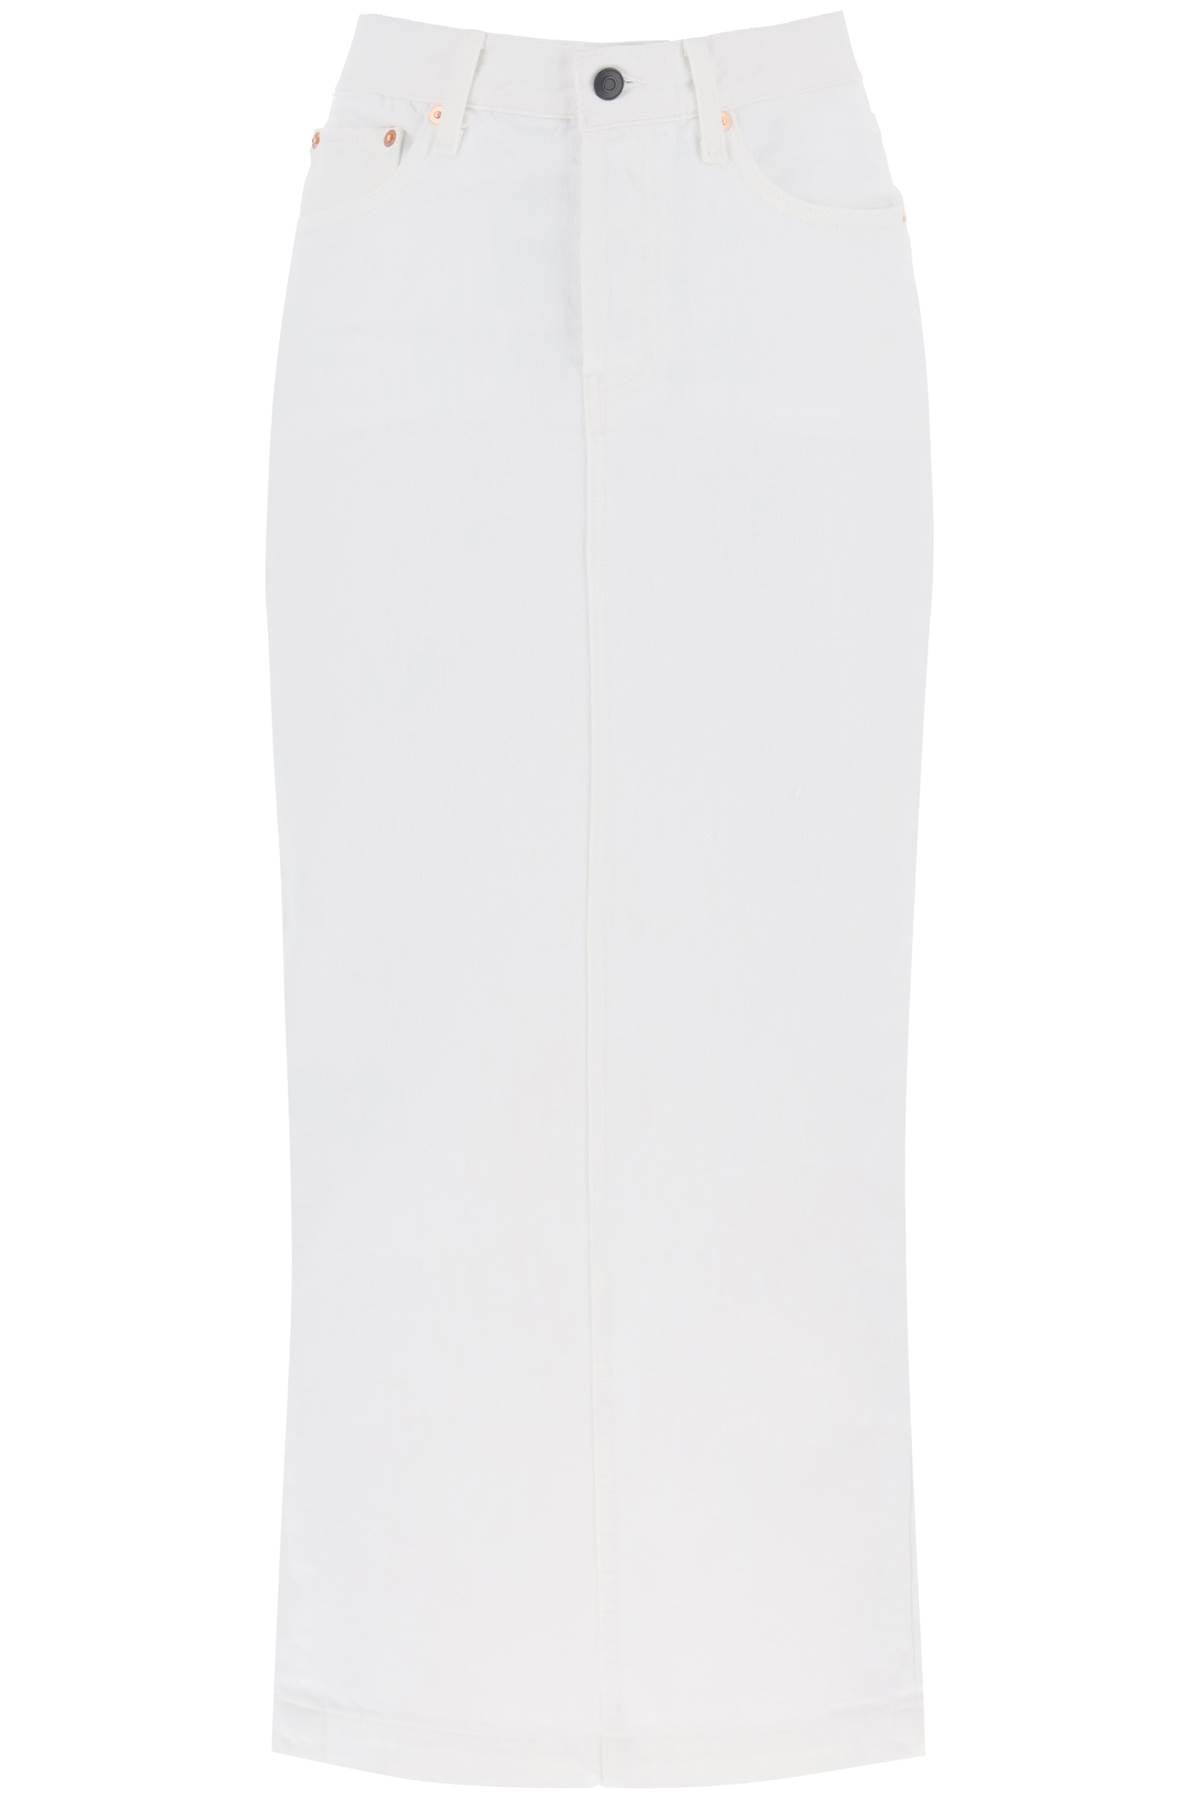 Wardrobe.nyc denim column skirt with a slim W2097PC WHITE